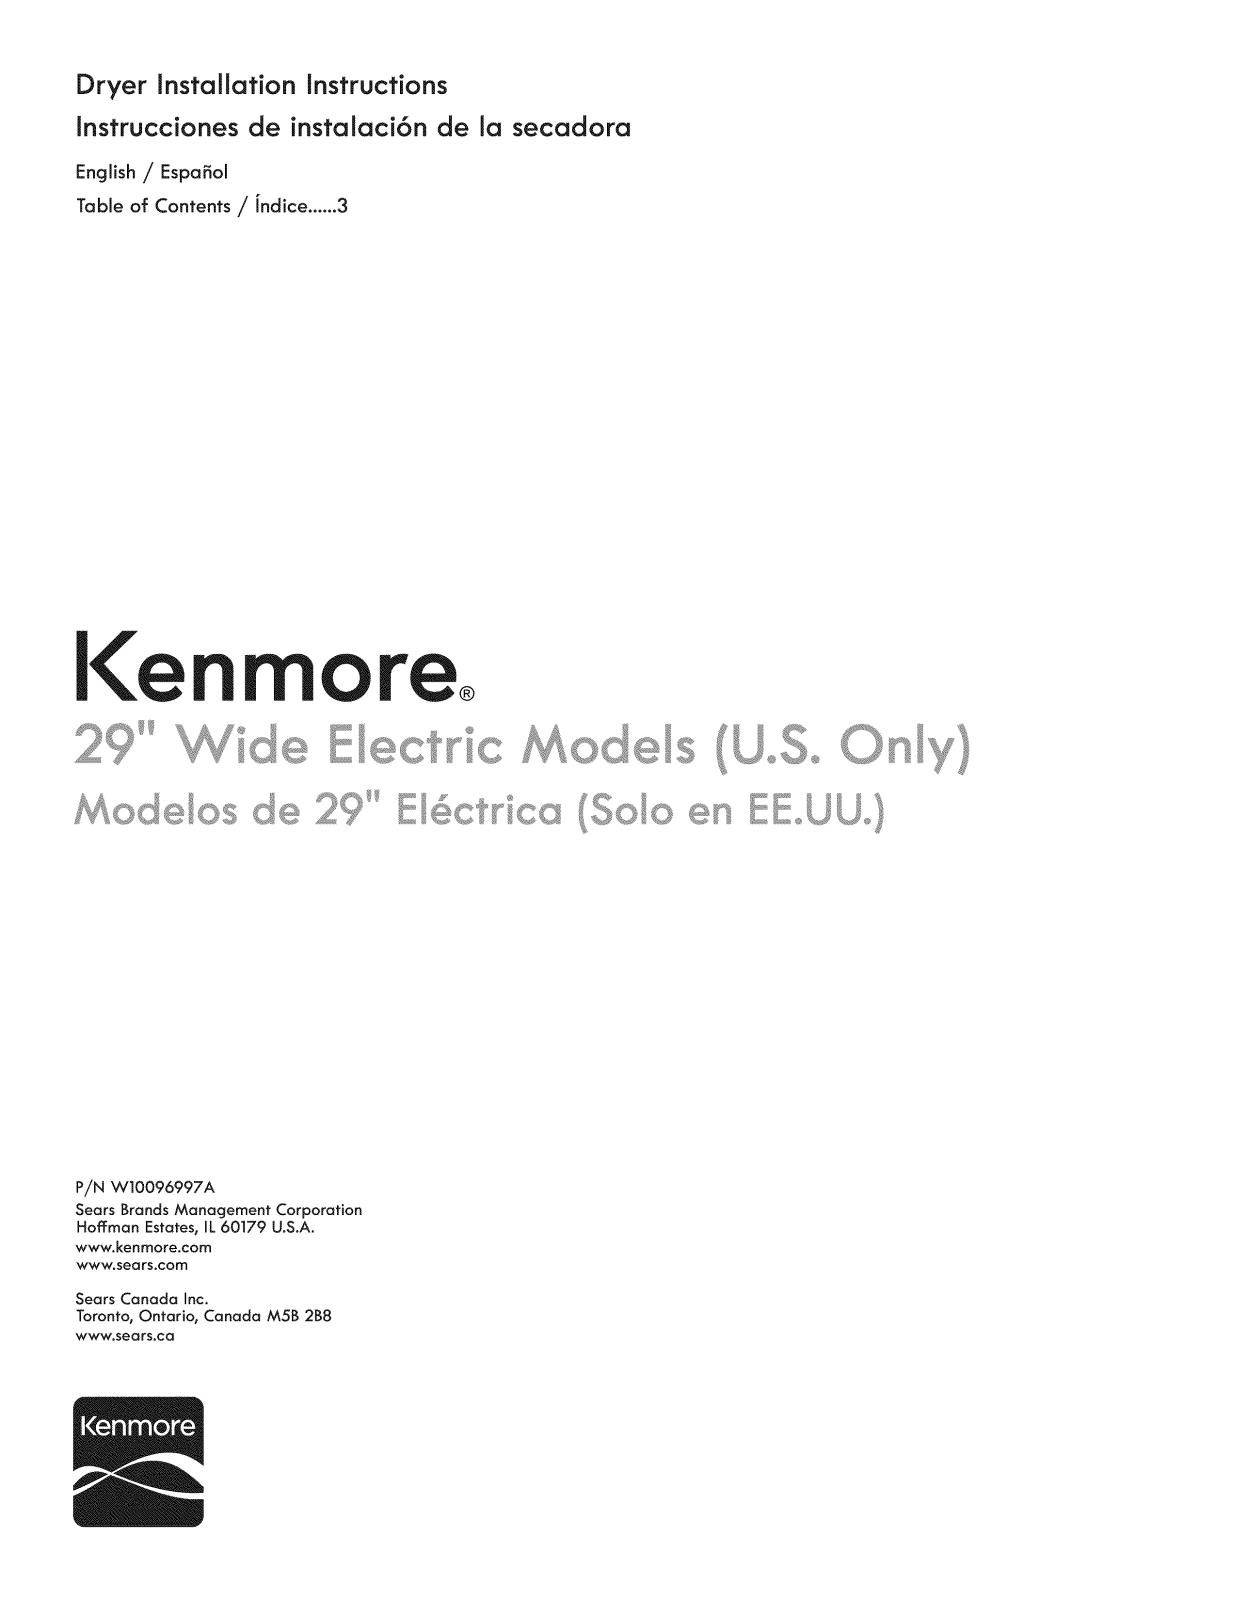 Kenmore 11060022010, 11060022011, 1106072010, 1106072011, 11061202010 Installation Guide